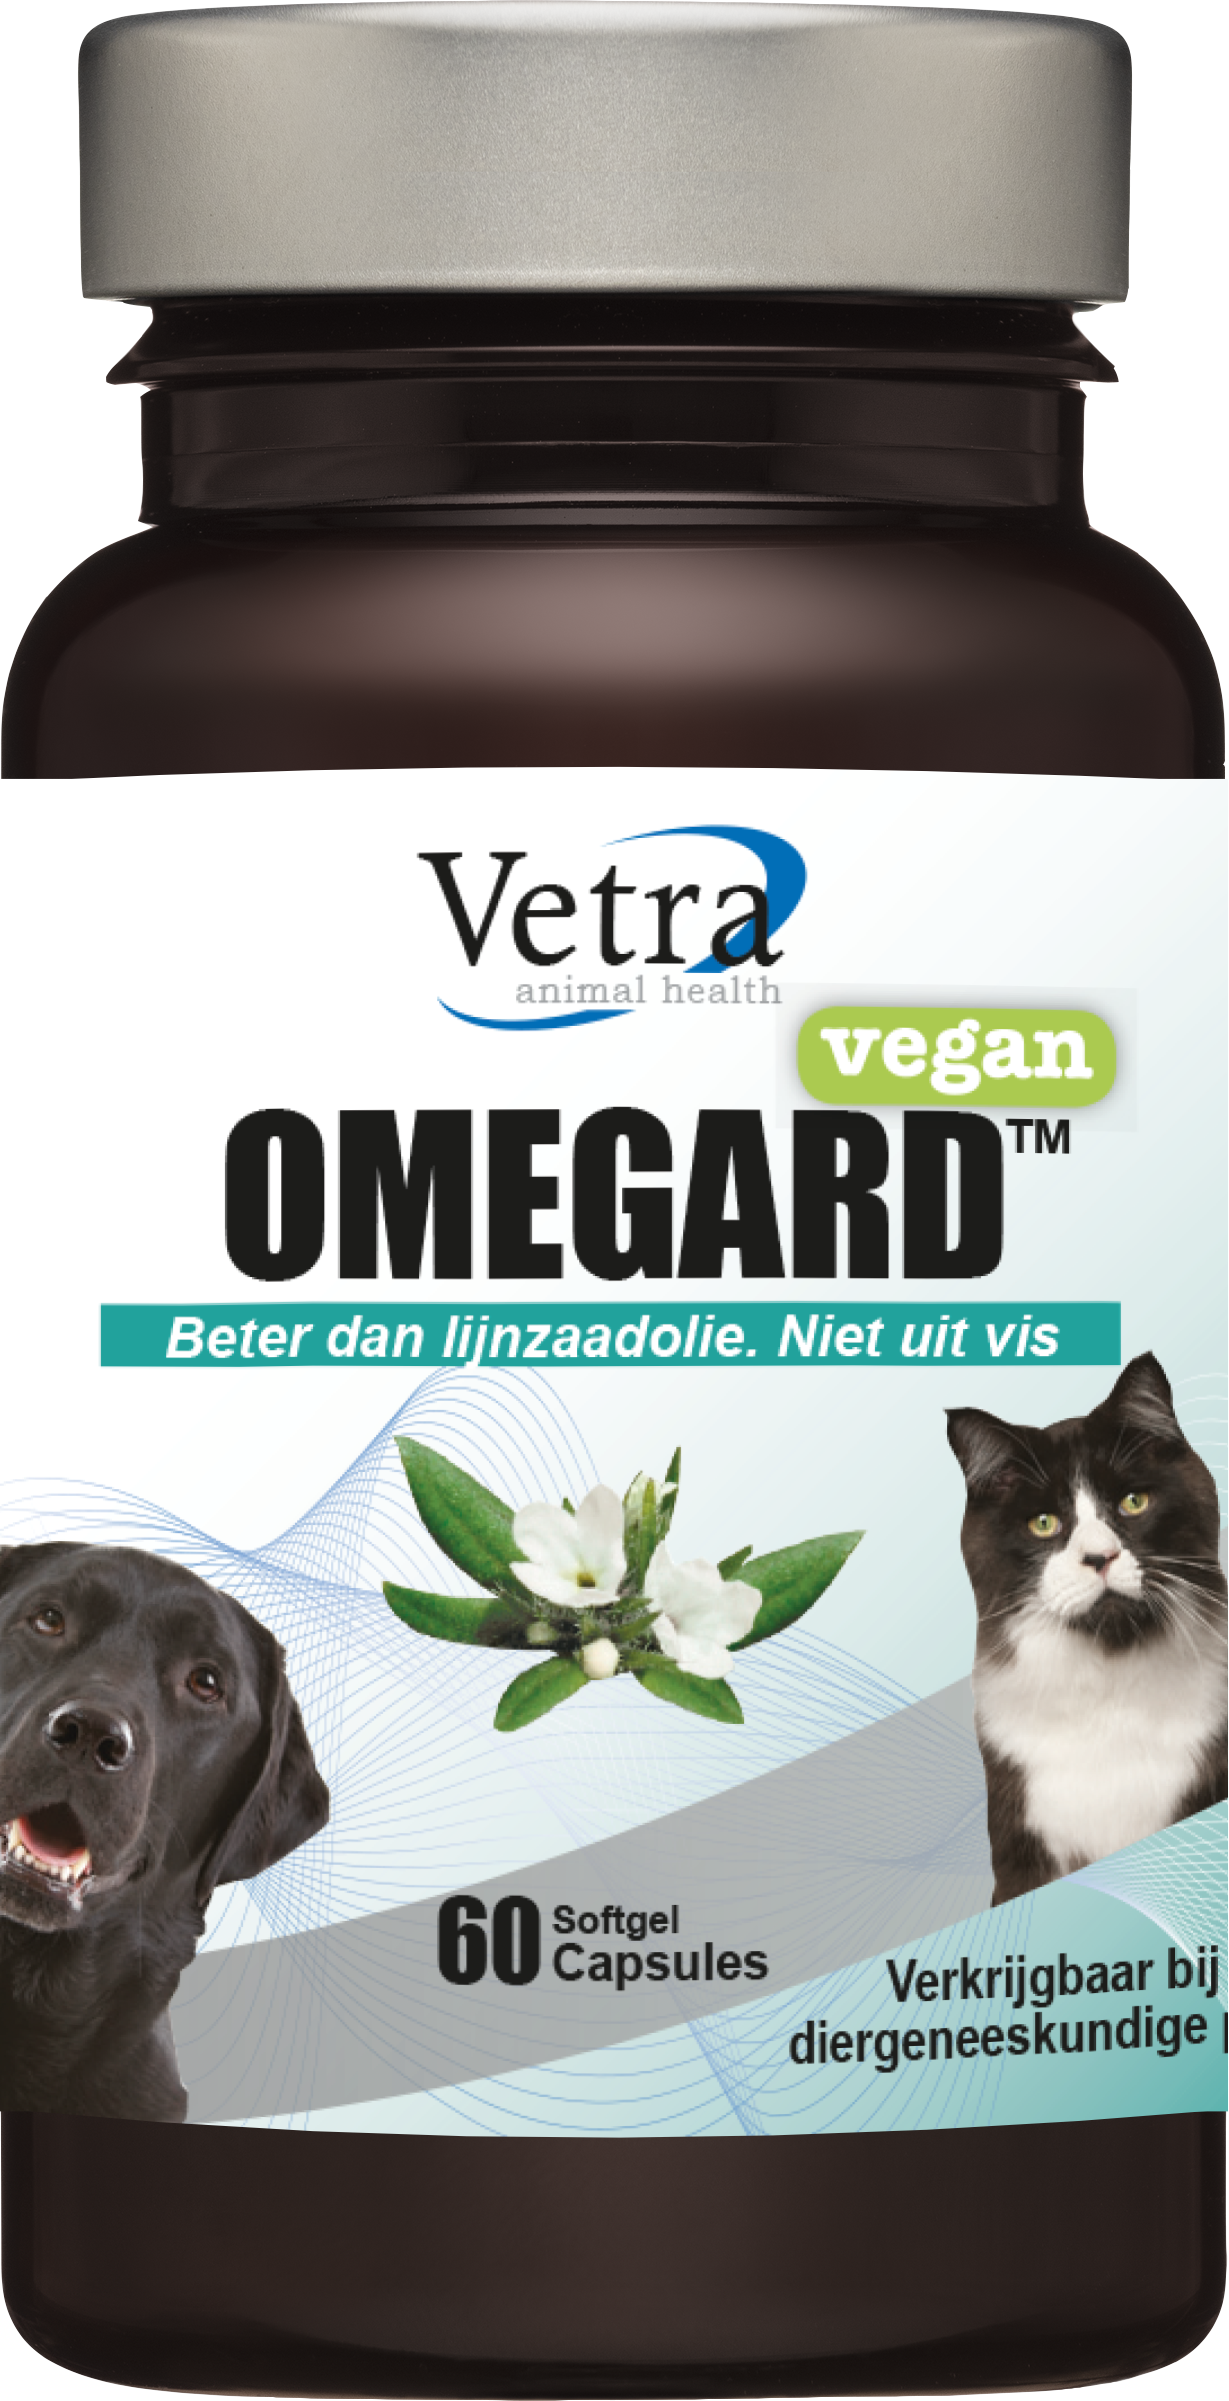 OmeGard Vegan